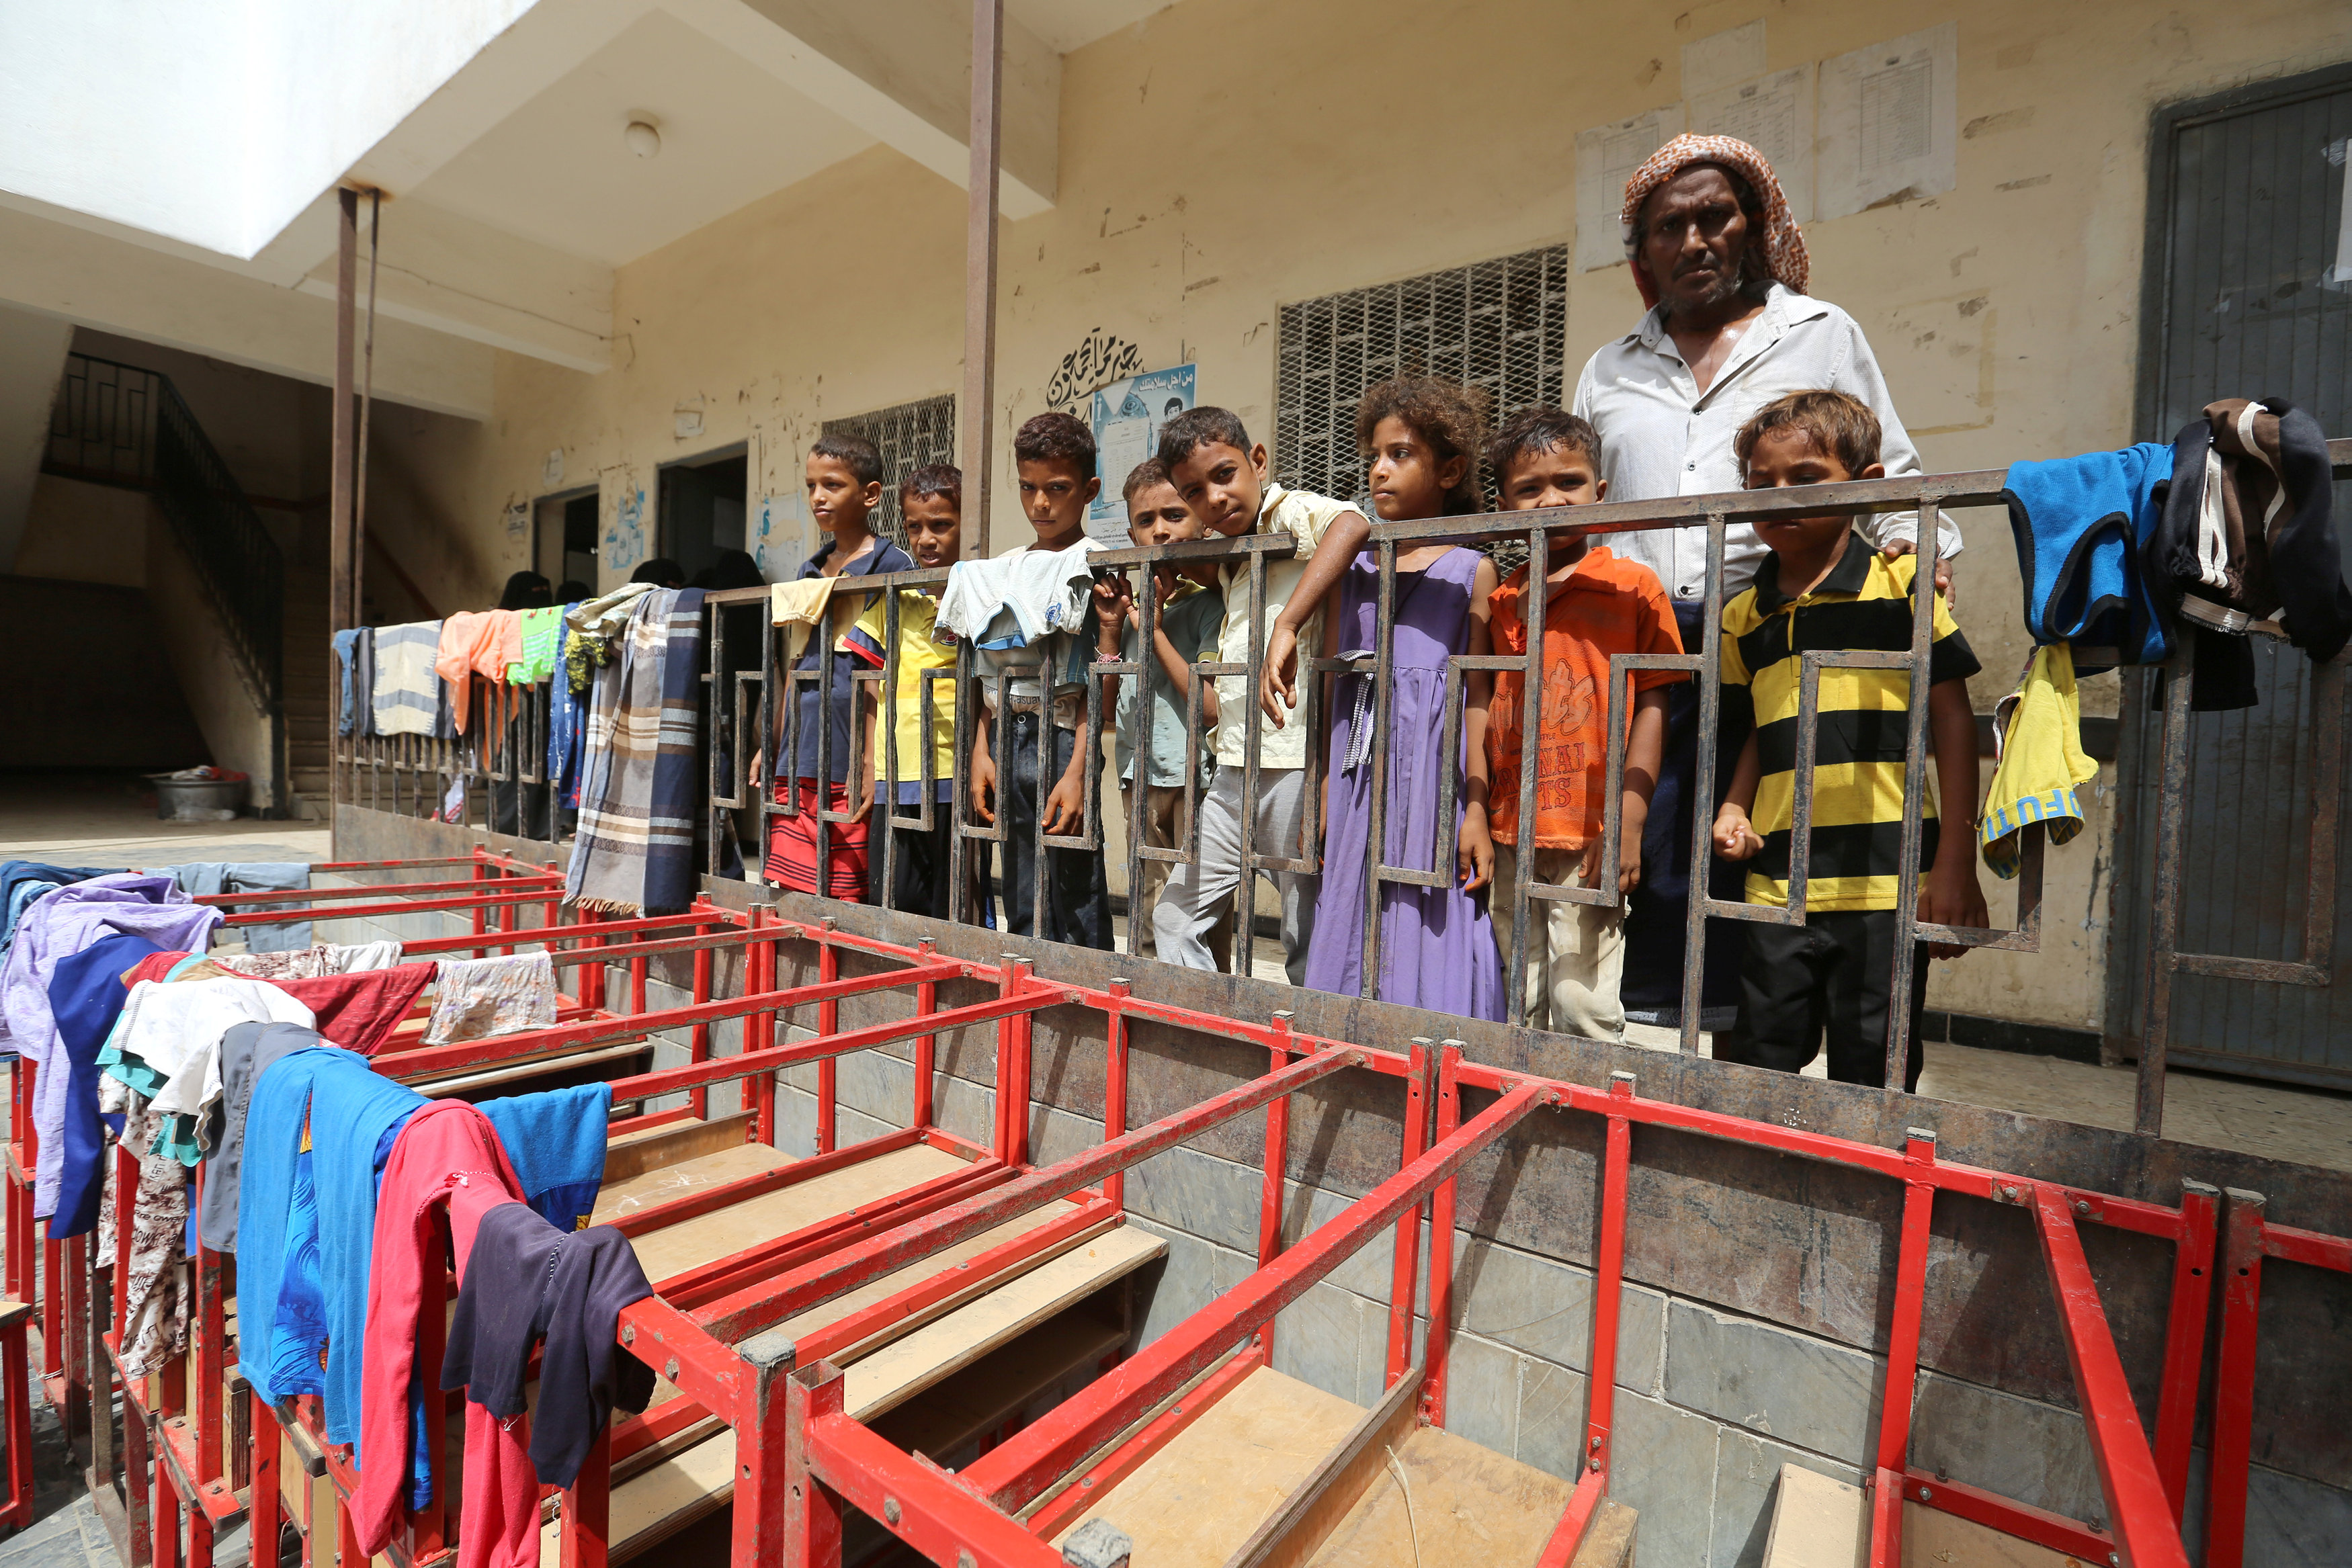 Yemeni civilians shelter in schools from air strikes in battle for major port